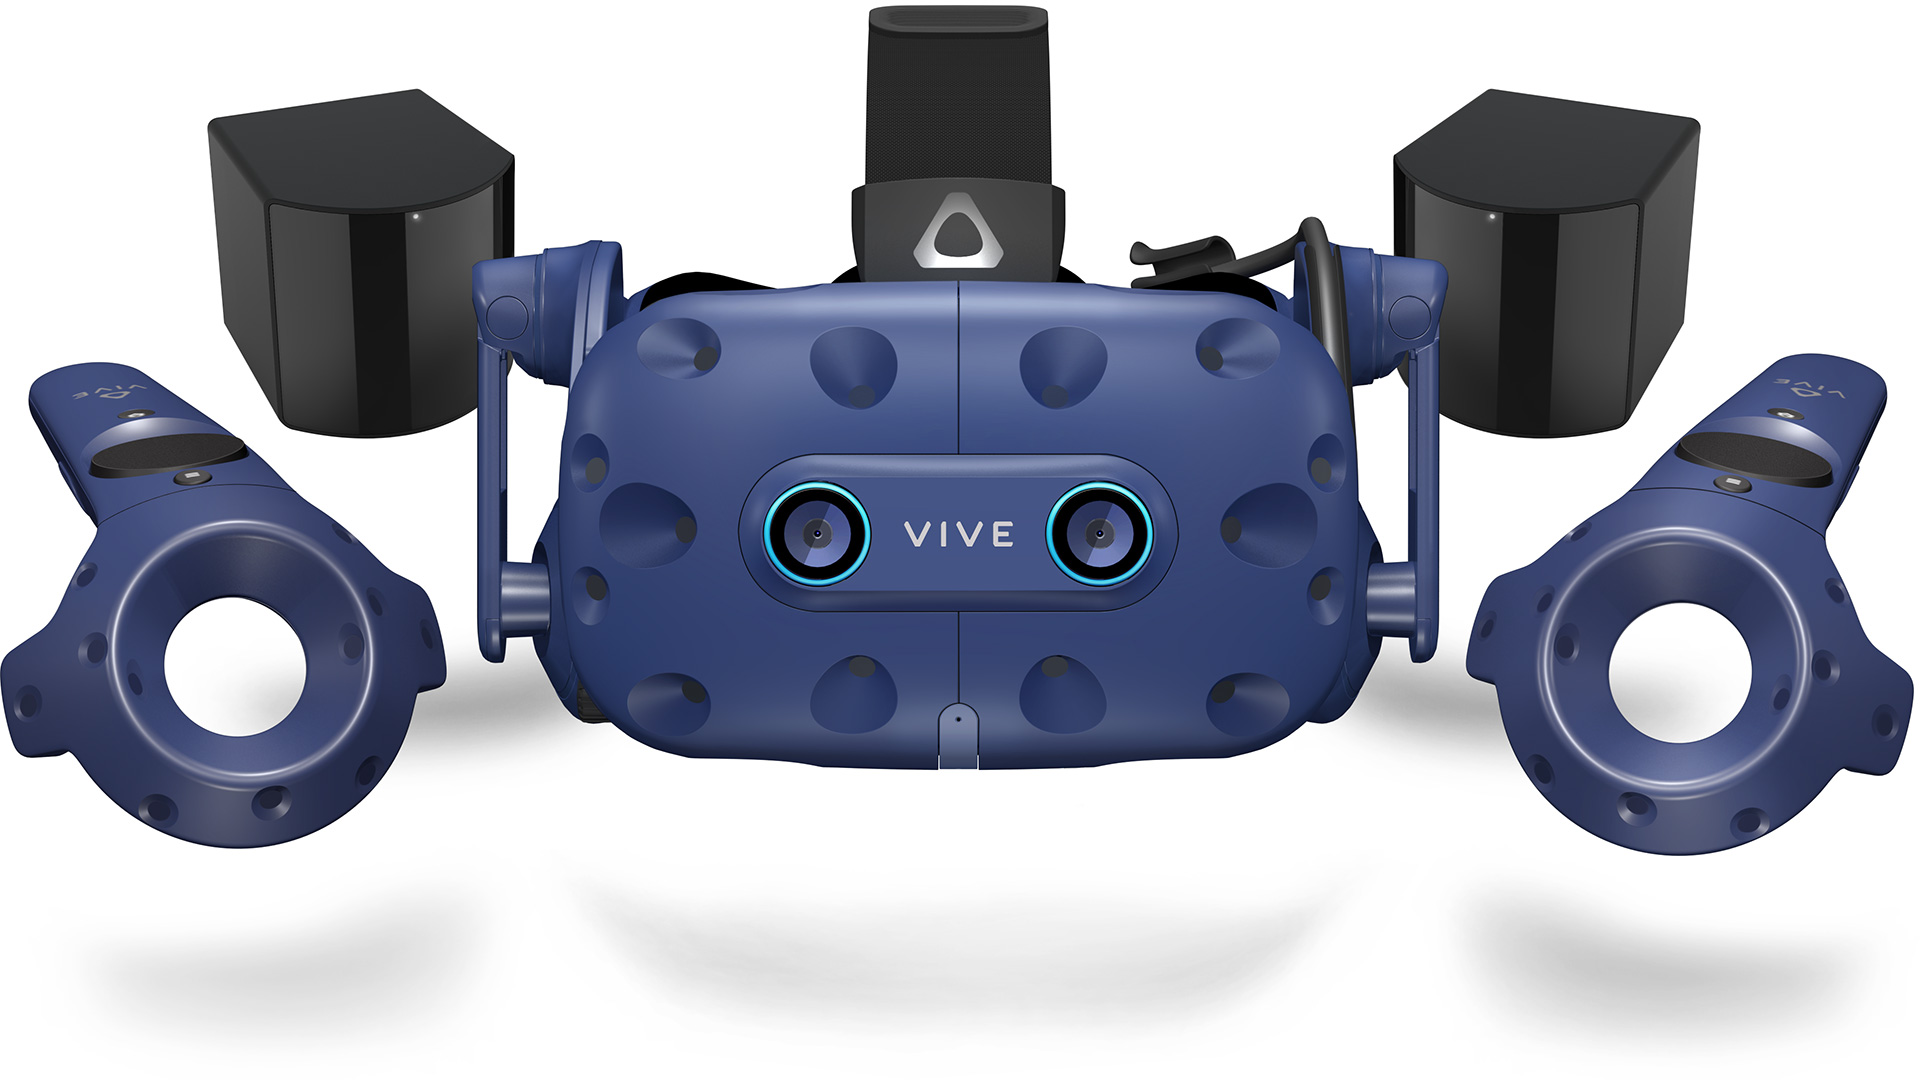 VIVE Pro Eye VR system